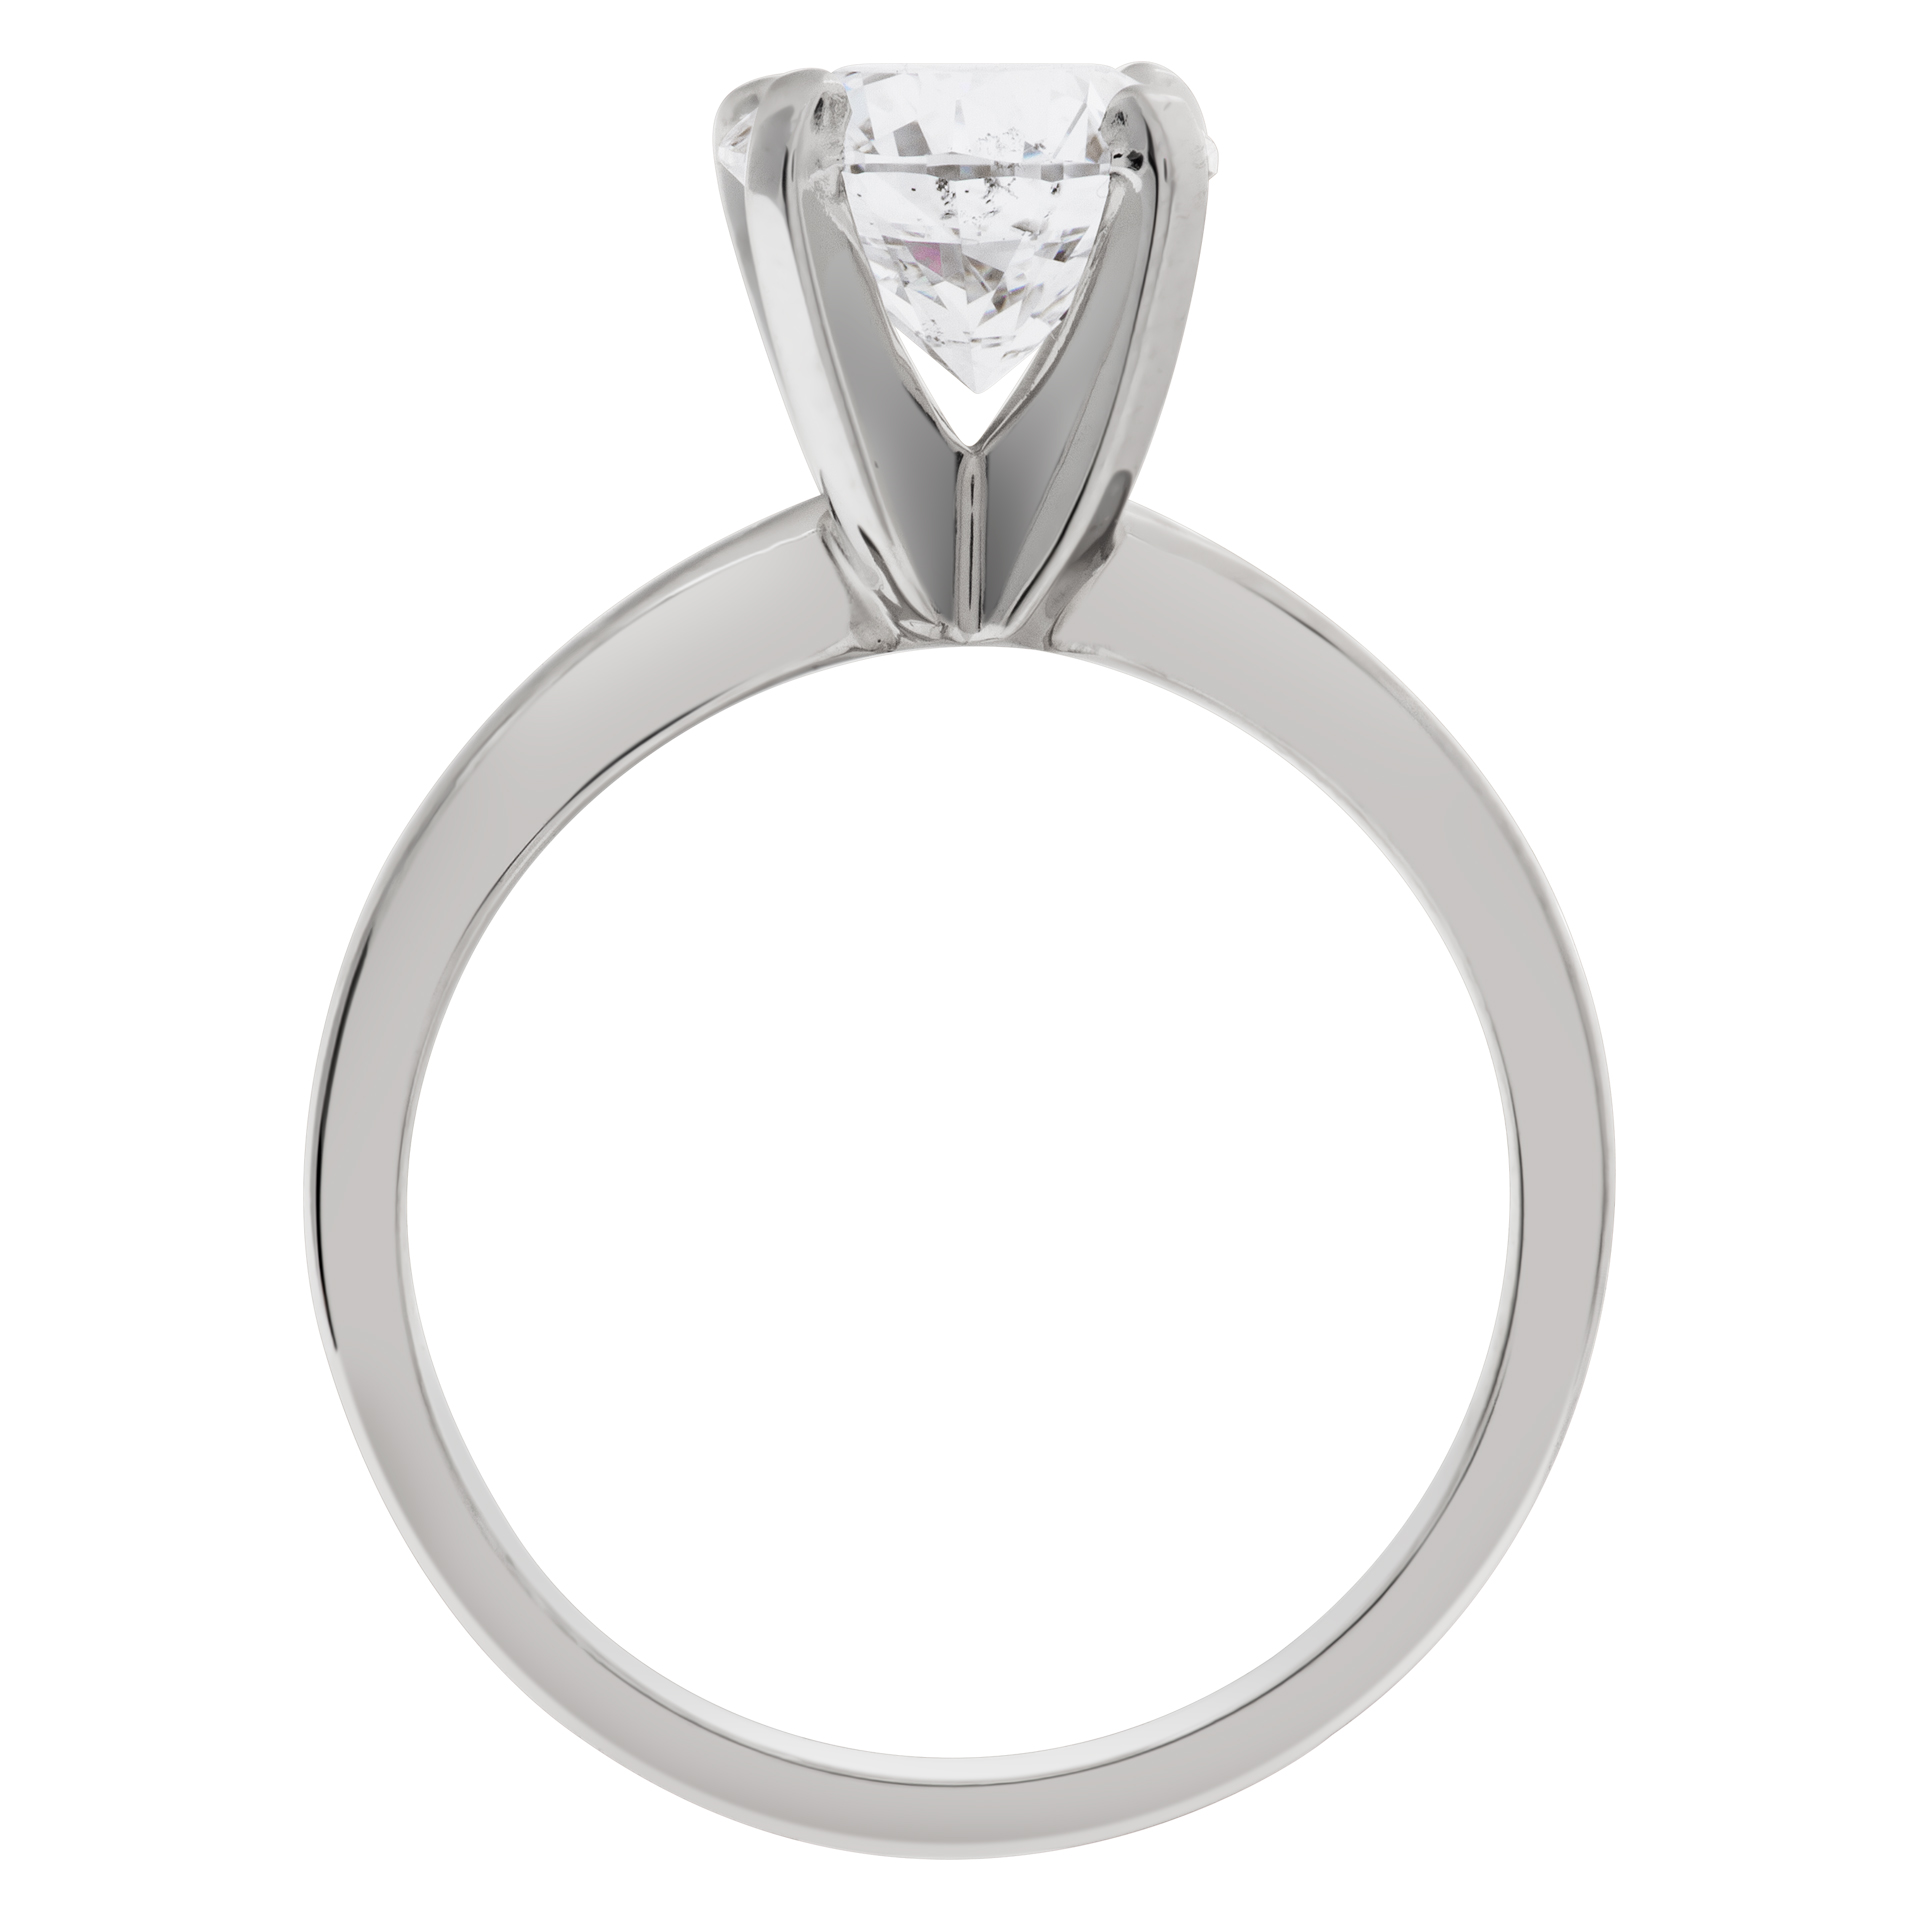 GIA certified round brilliant diamond 1.51 carat (G color, I1 clarity) image 5